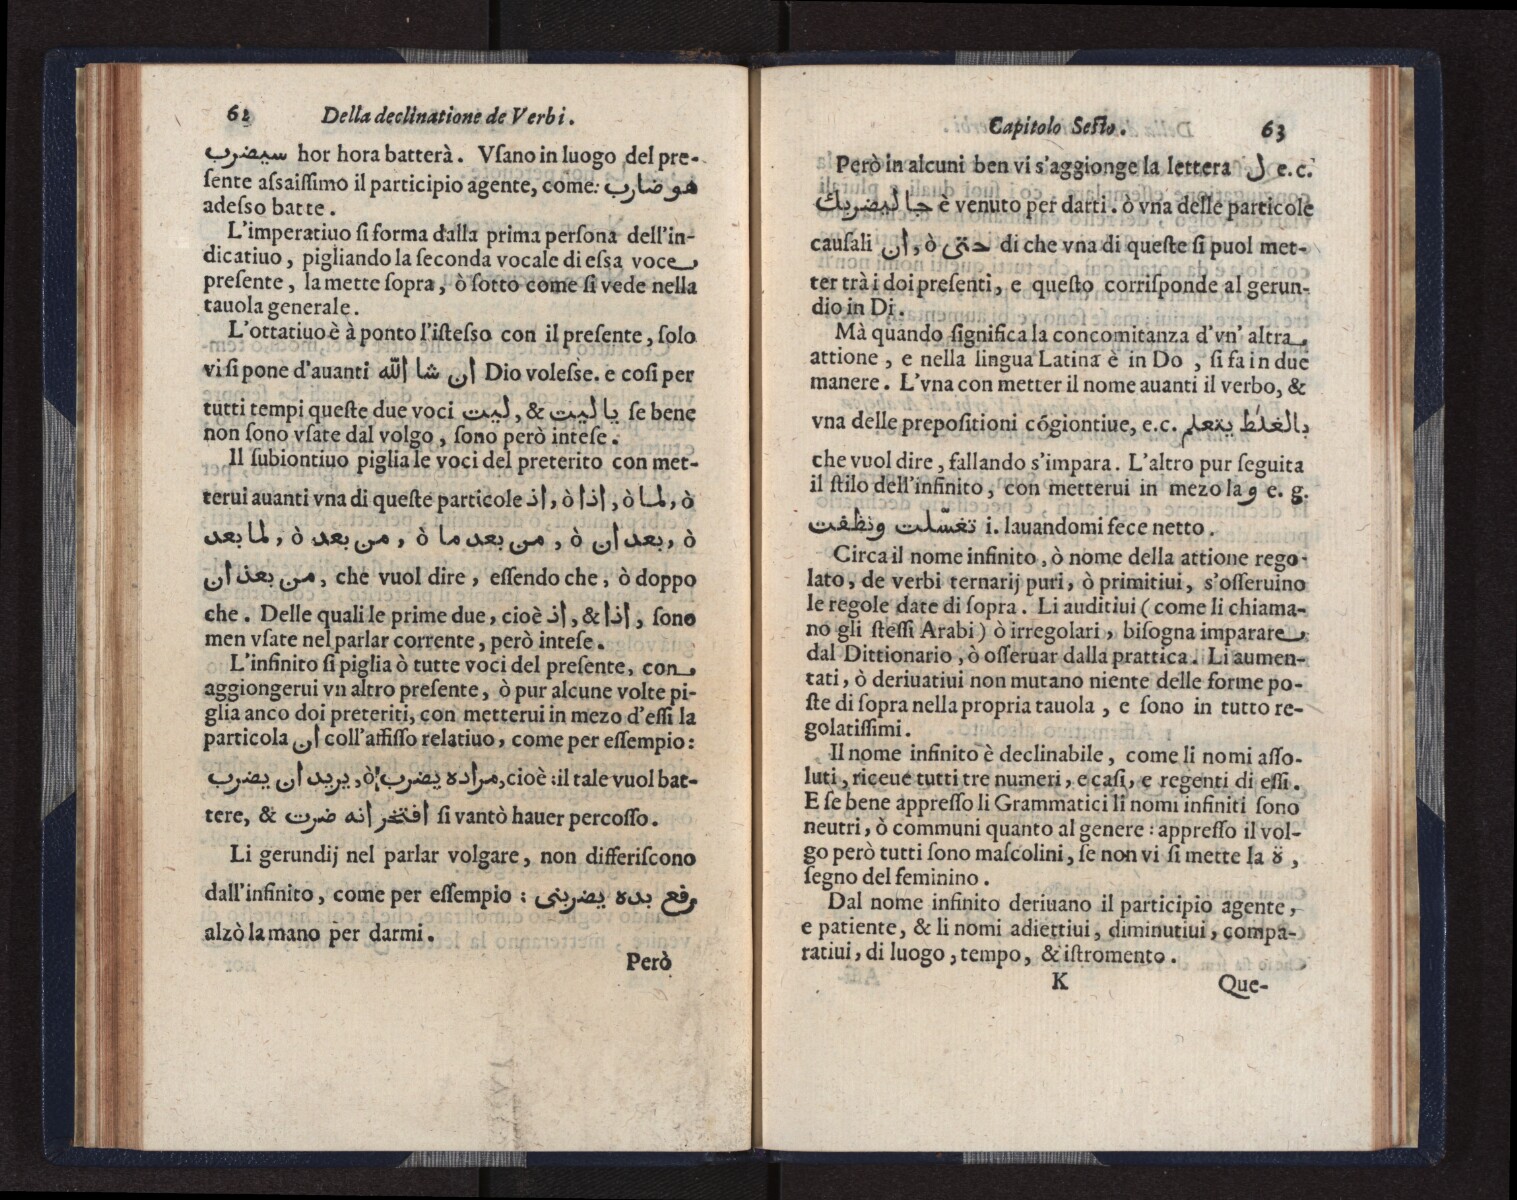 Fabrica Or Dictionary Of Vernacular Arabic And Italian Language F 1 40 40 63 Qatar Digital Library